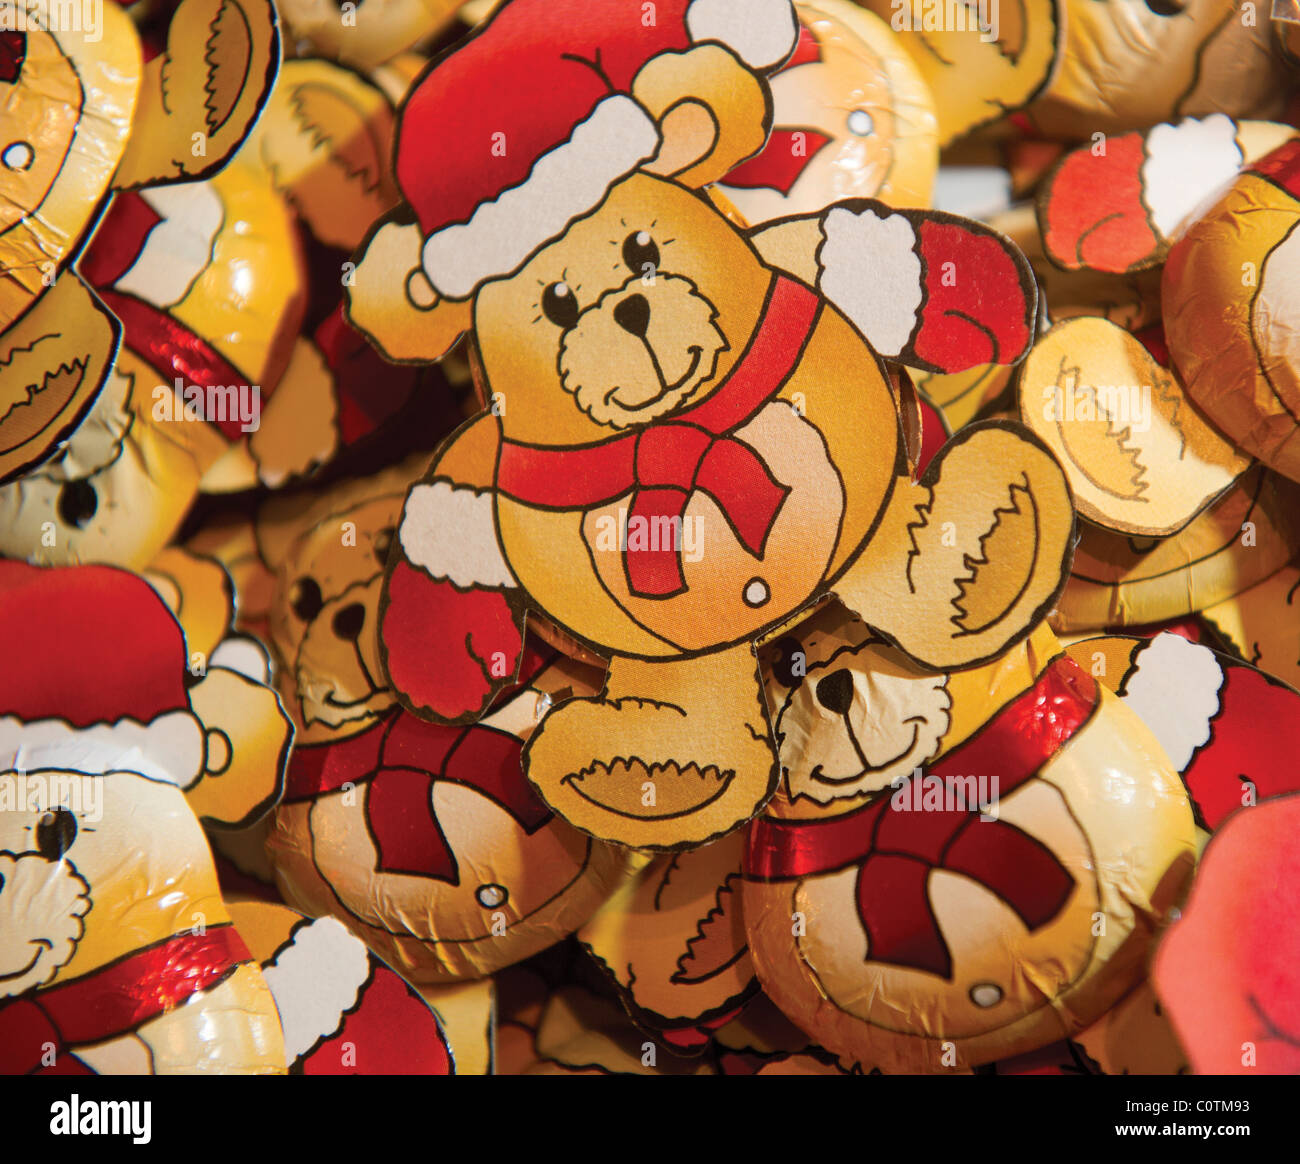 Christmas chocolate teddy bears Stock Photo